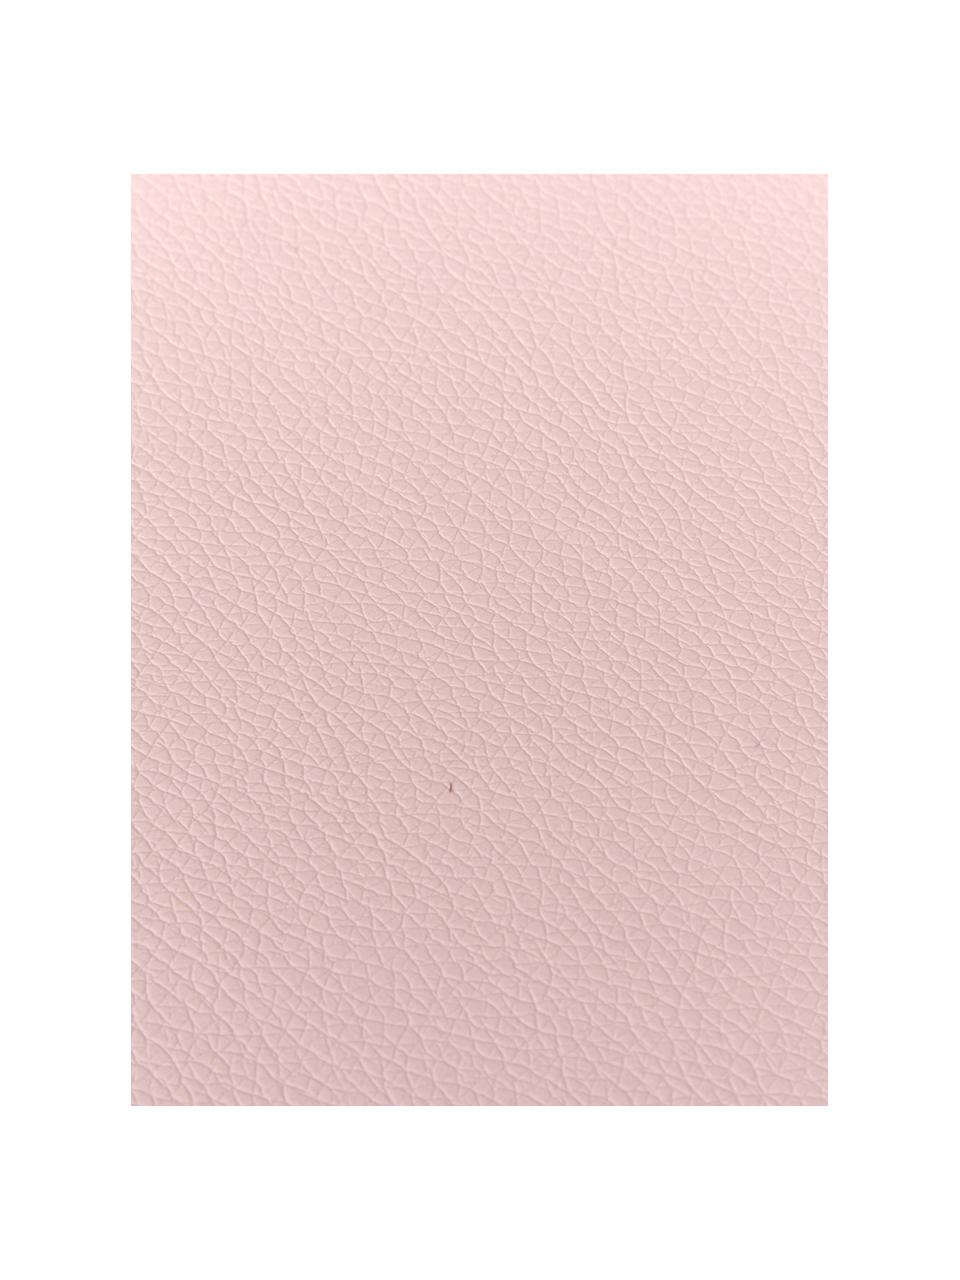 Placemats Asia, 2 stuks, Kunstleer (PVC), Roze, B 33 x L 46 cm